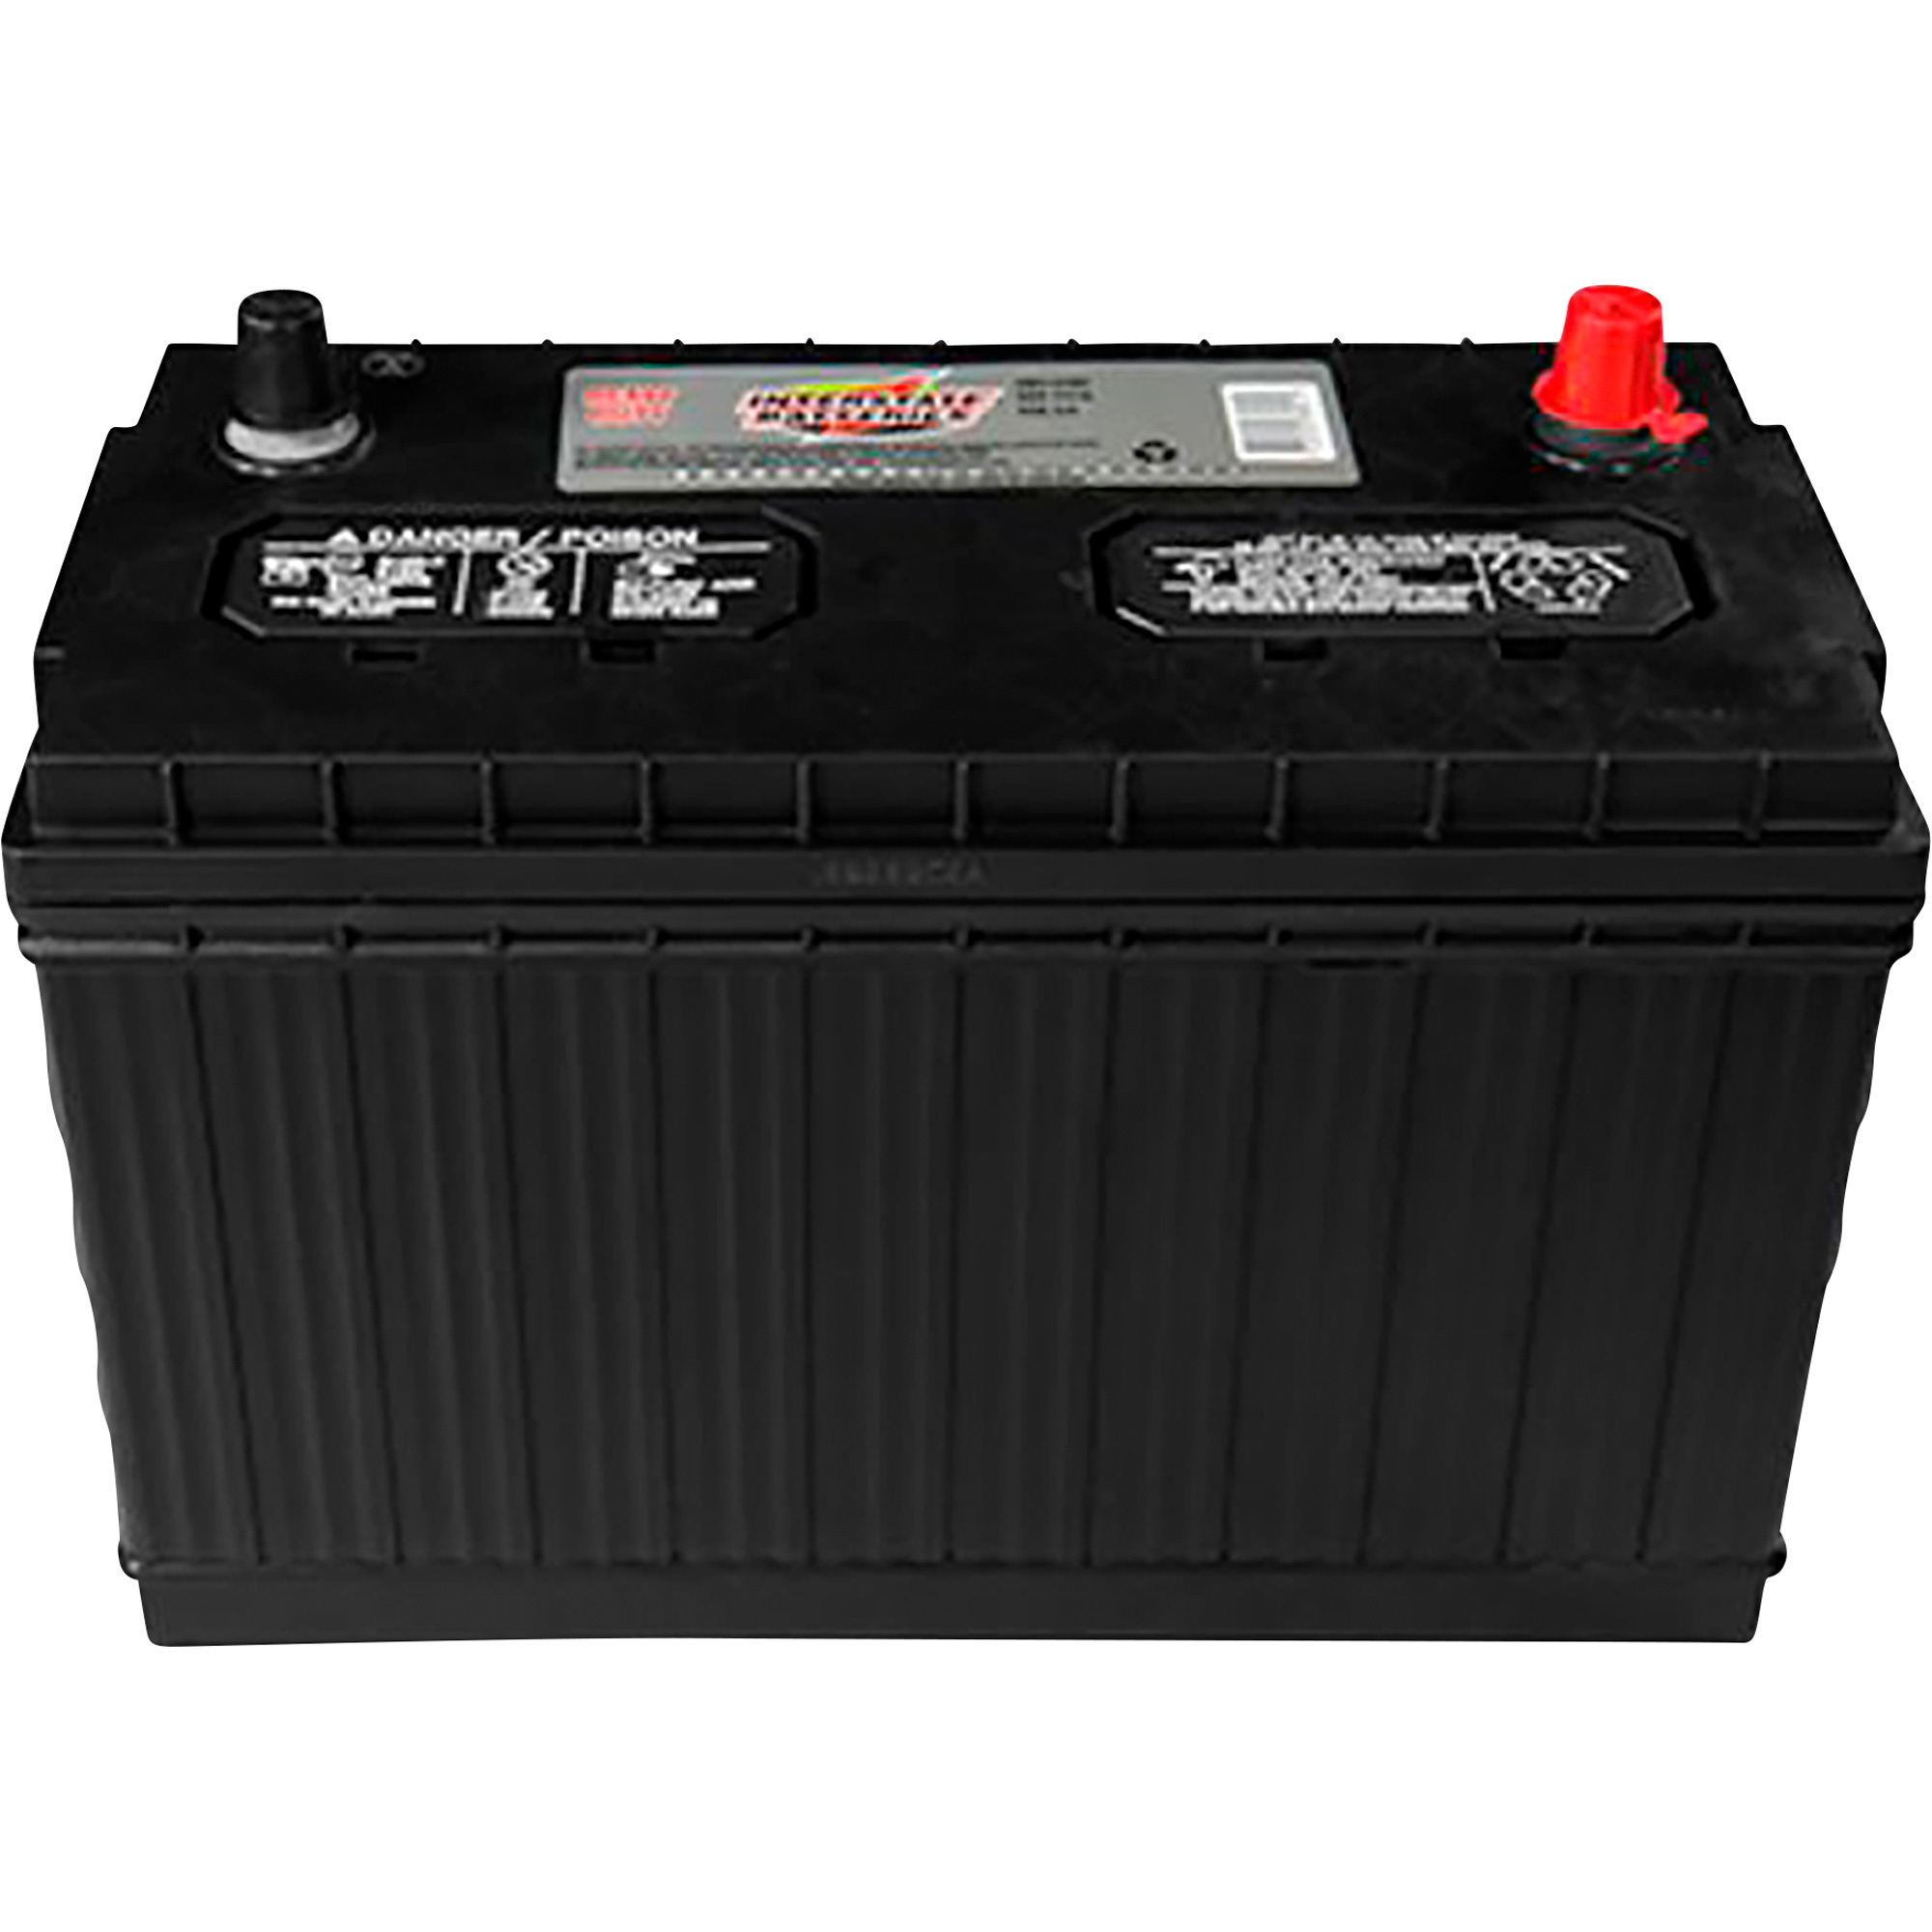 Interstate Batteries Heavy-Duty Commercial Battery, Model 29H-VHD